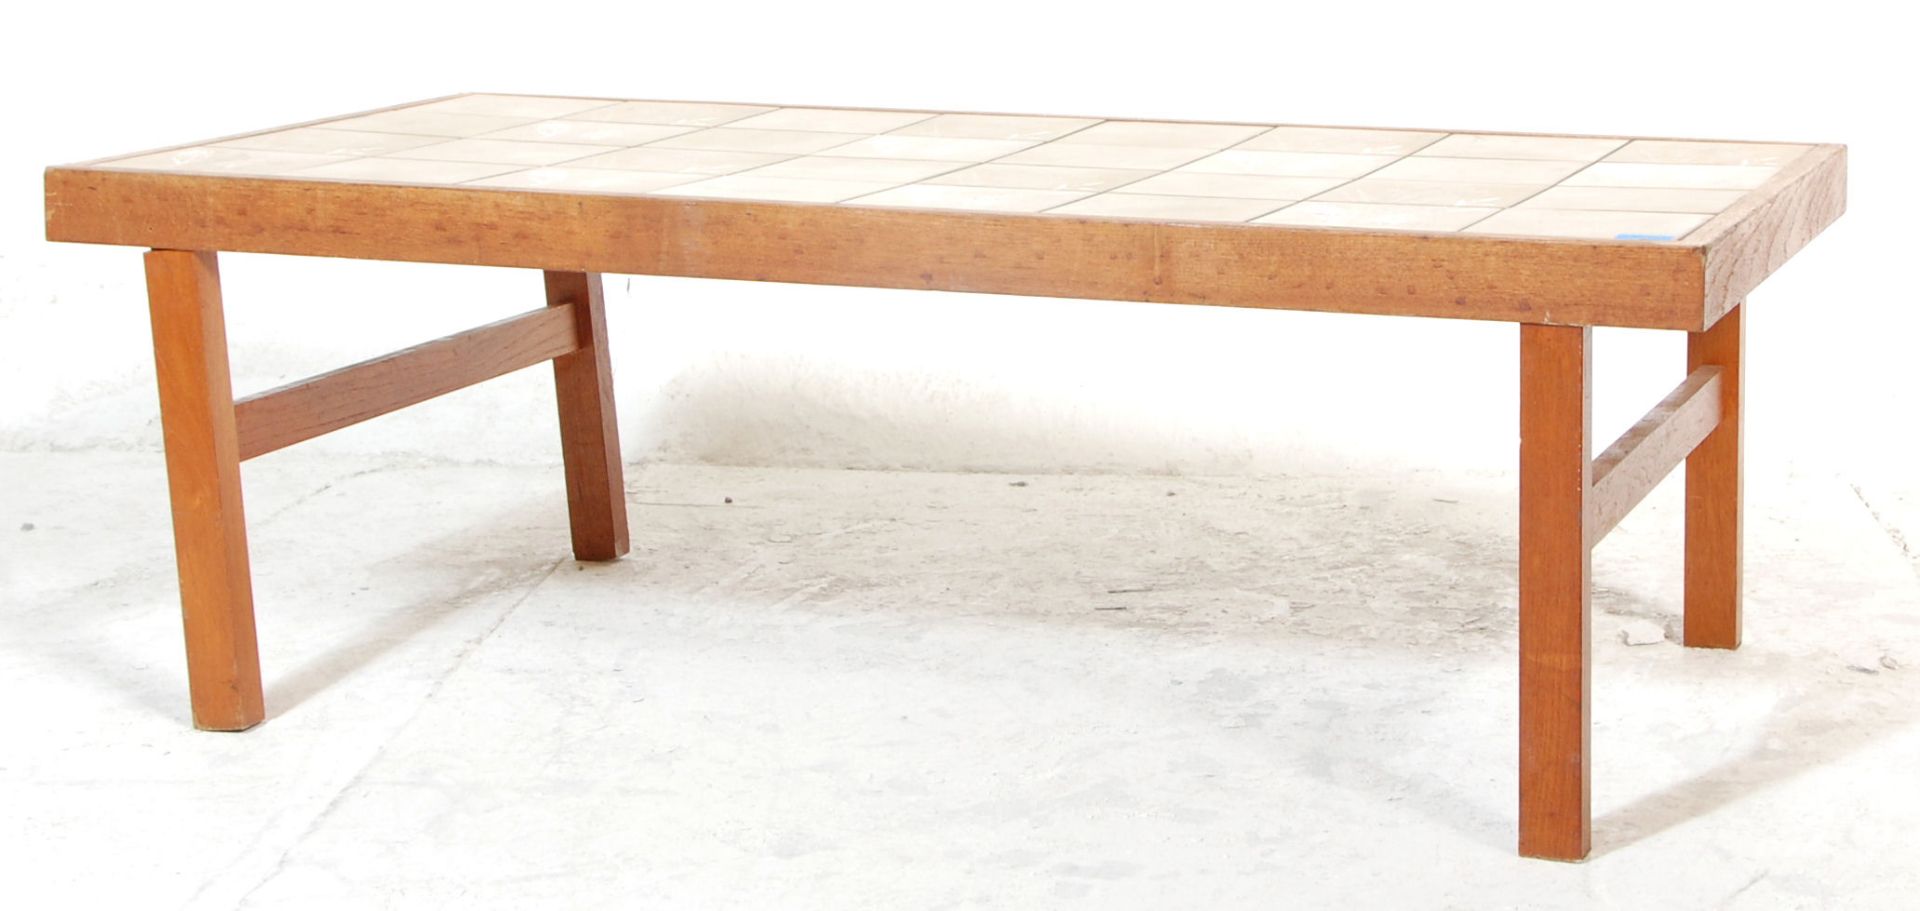 Trioh - A retro vintage 1960's Danish teak wood and tile top coffee - occasional table by Trioh of - Bild 4 aus 6